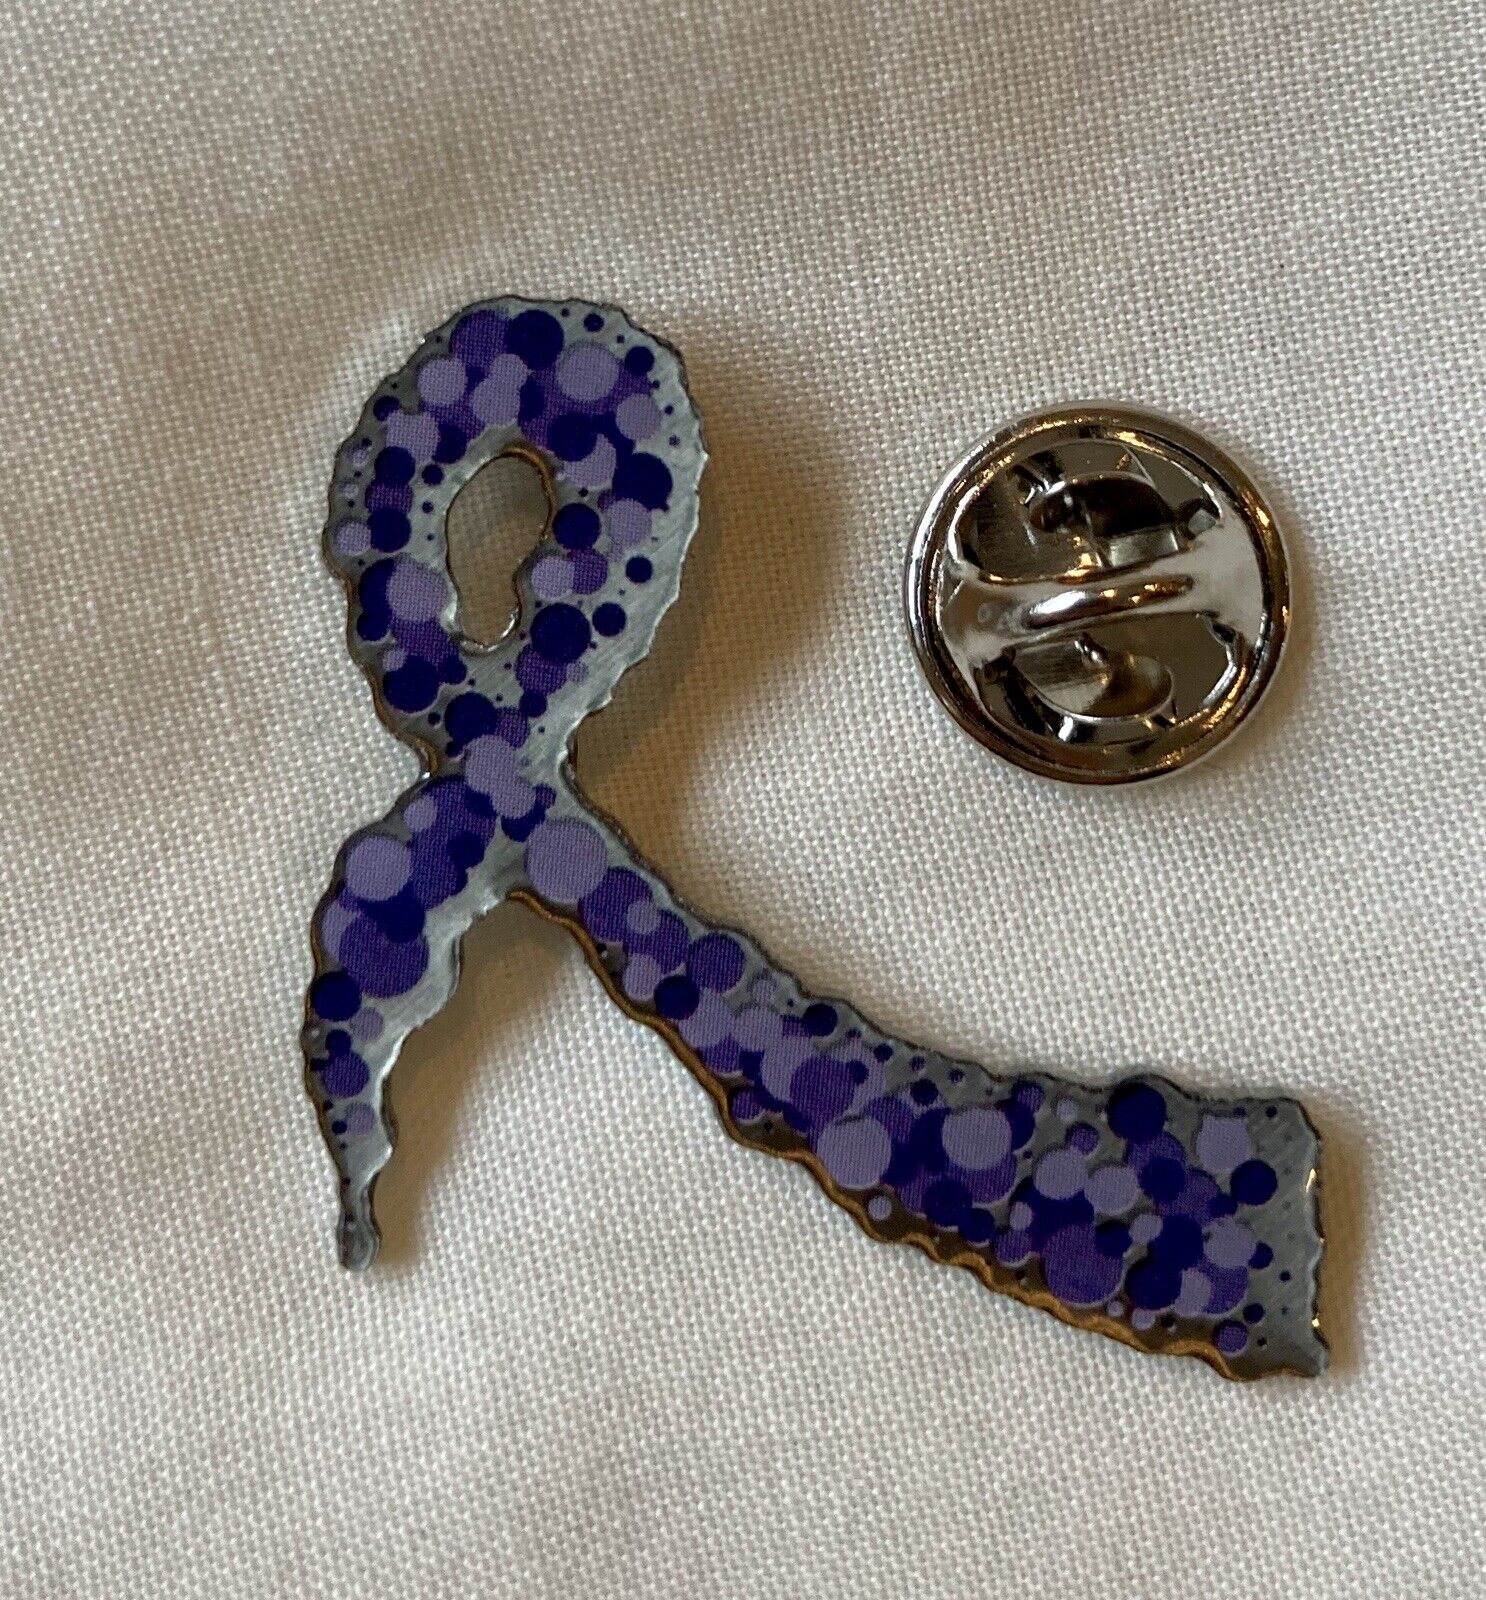 Eating Disorders Awareness ribbon purple pin badge .Anorexia Nervosa, Bulimia